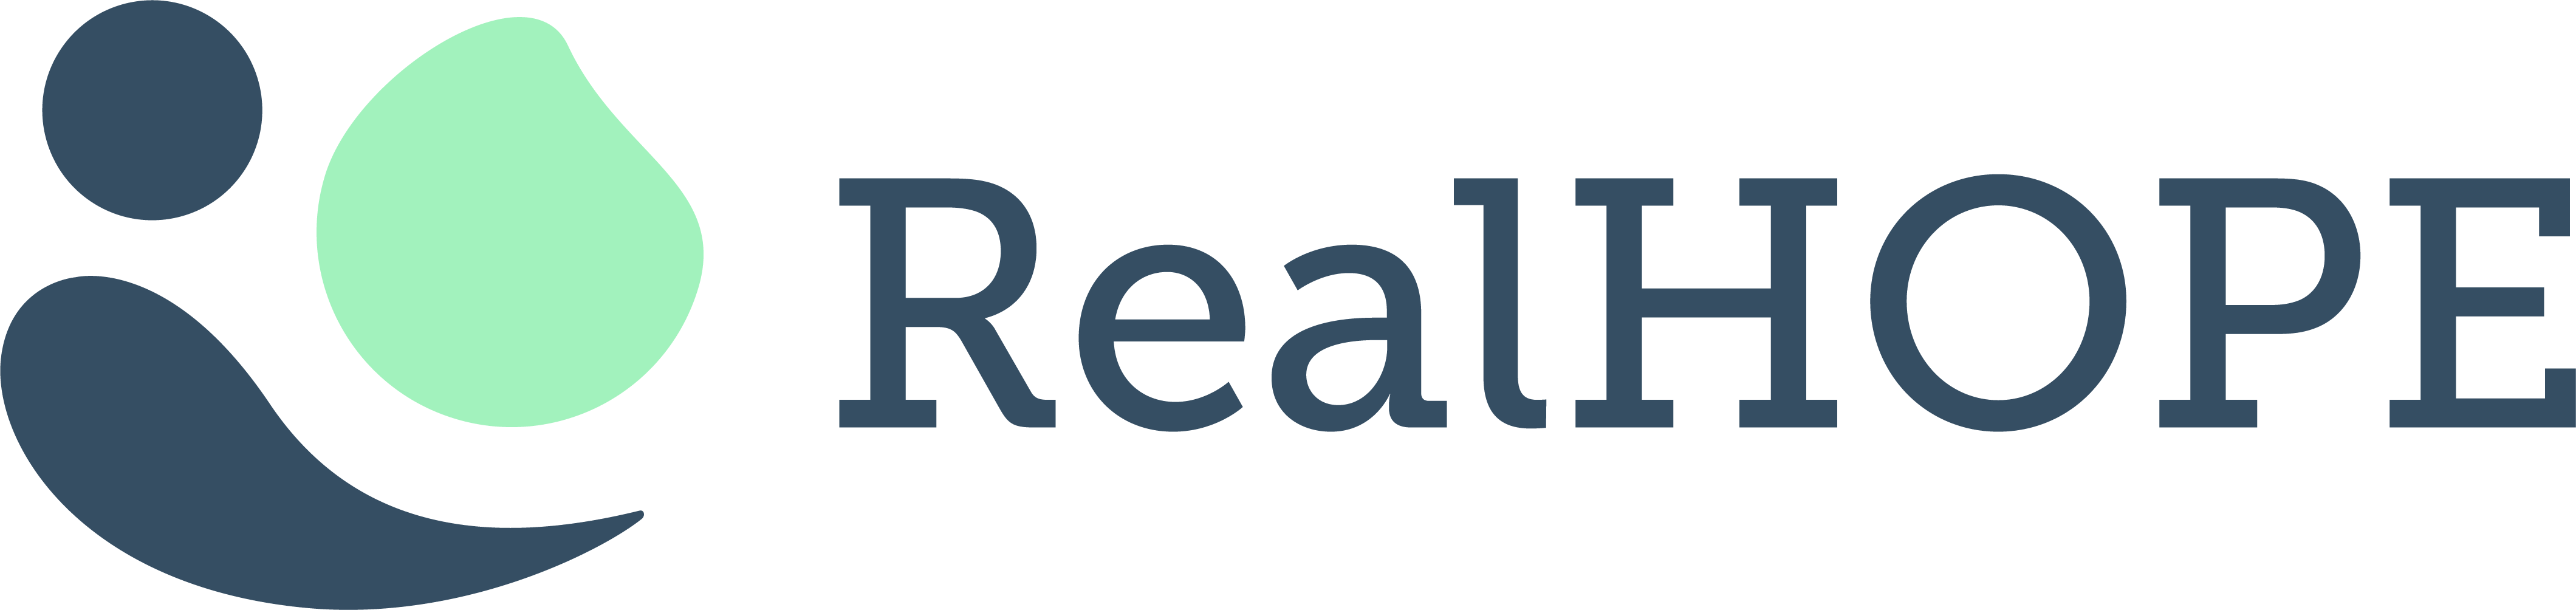 RealHOPE logo